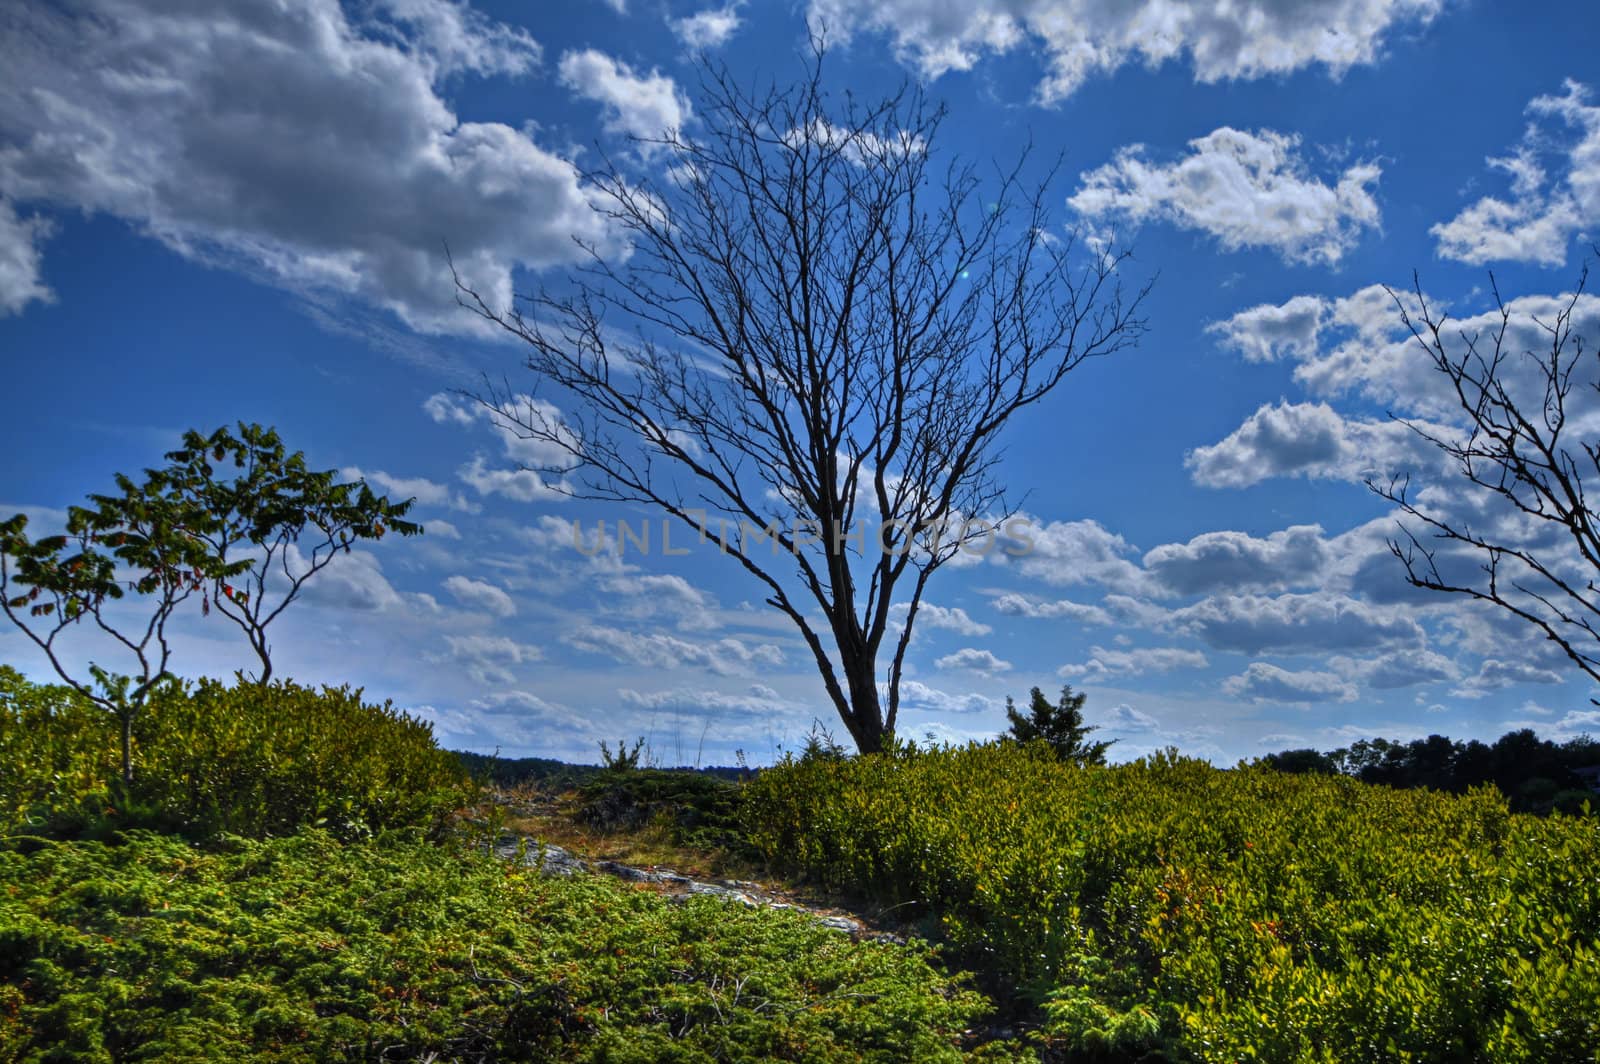 A single tree on a hill near the ocean on a blue sky background